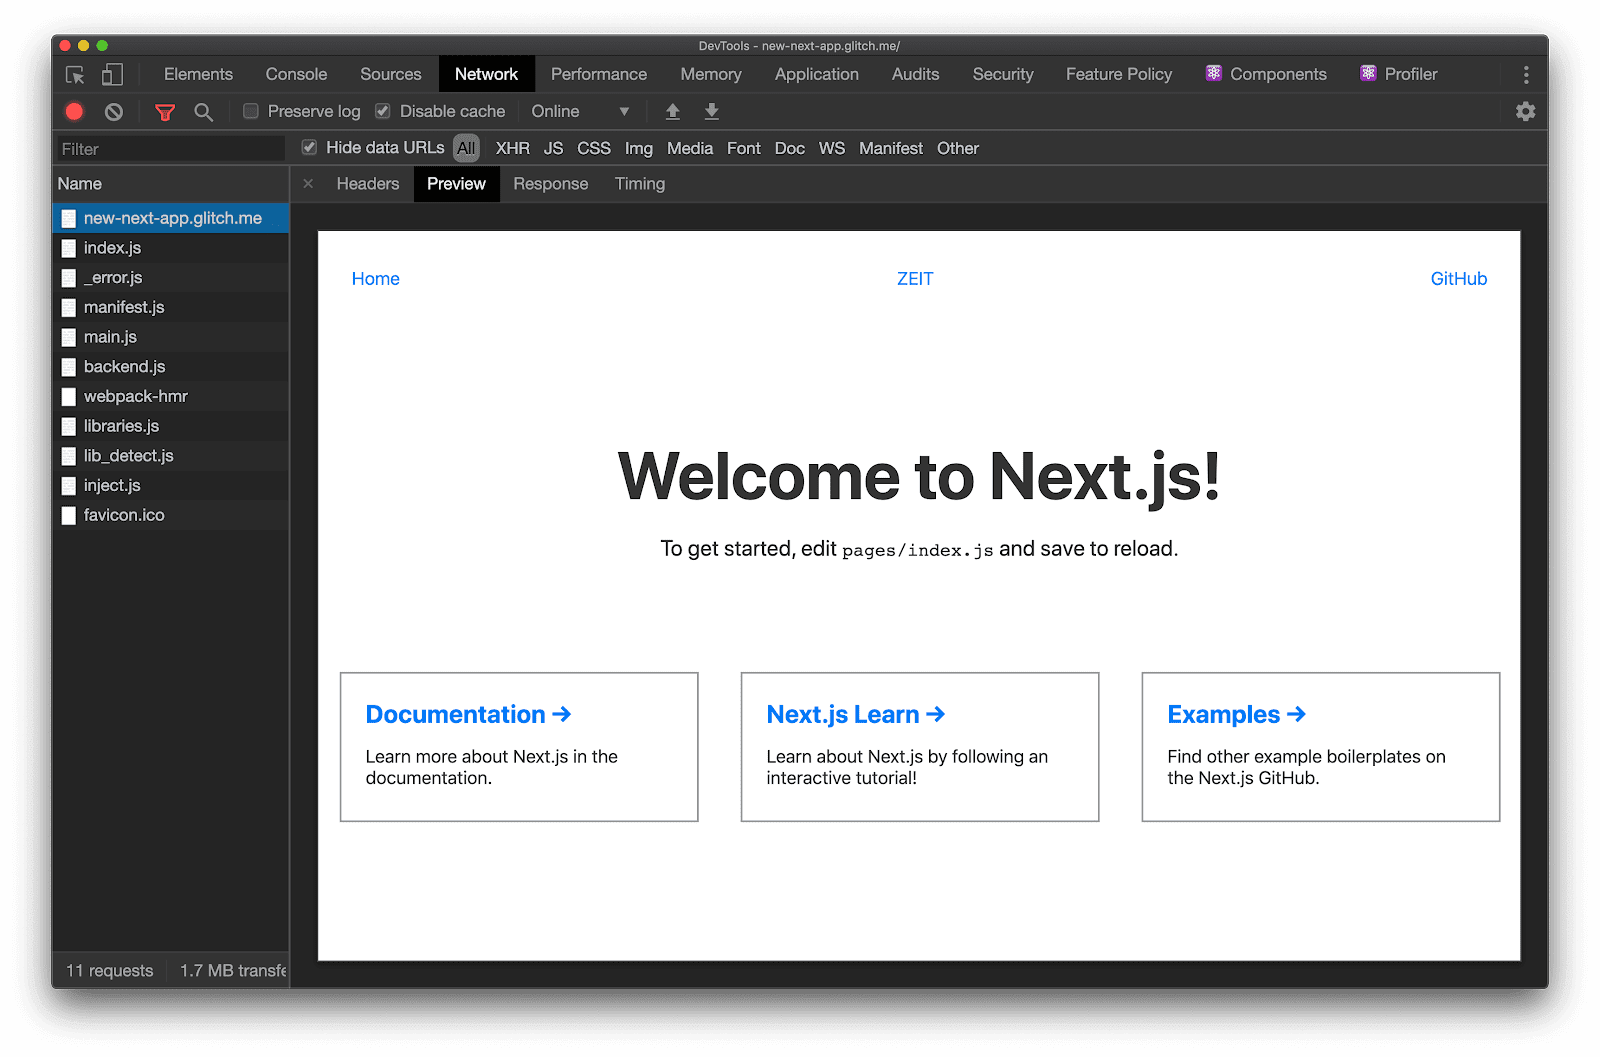 Network 面板的“Preview”标签页显示，在请求页面时，Next.js 会返回视觉上的完整 HTML。